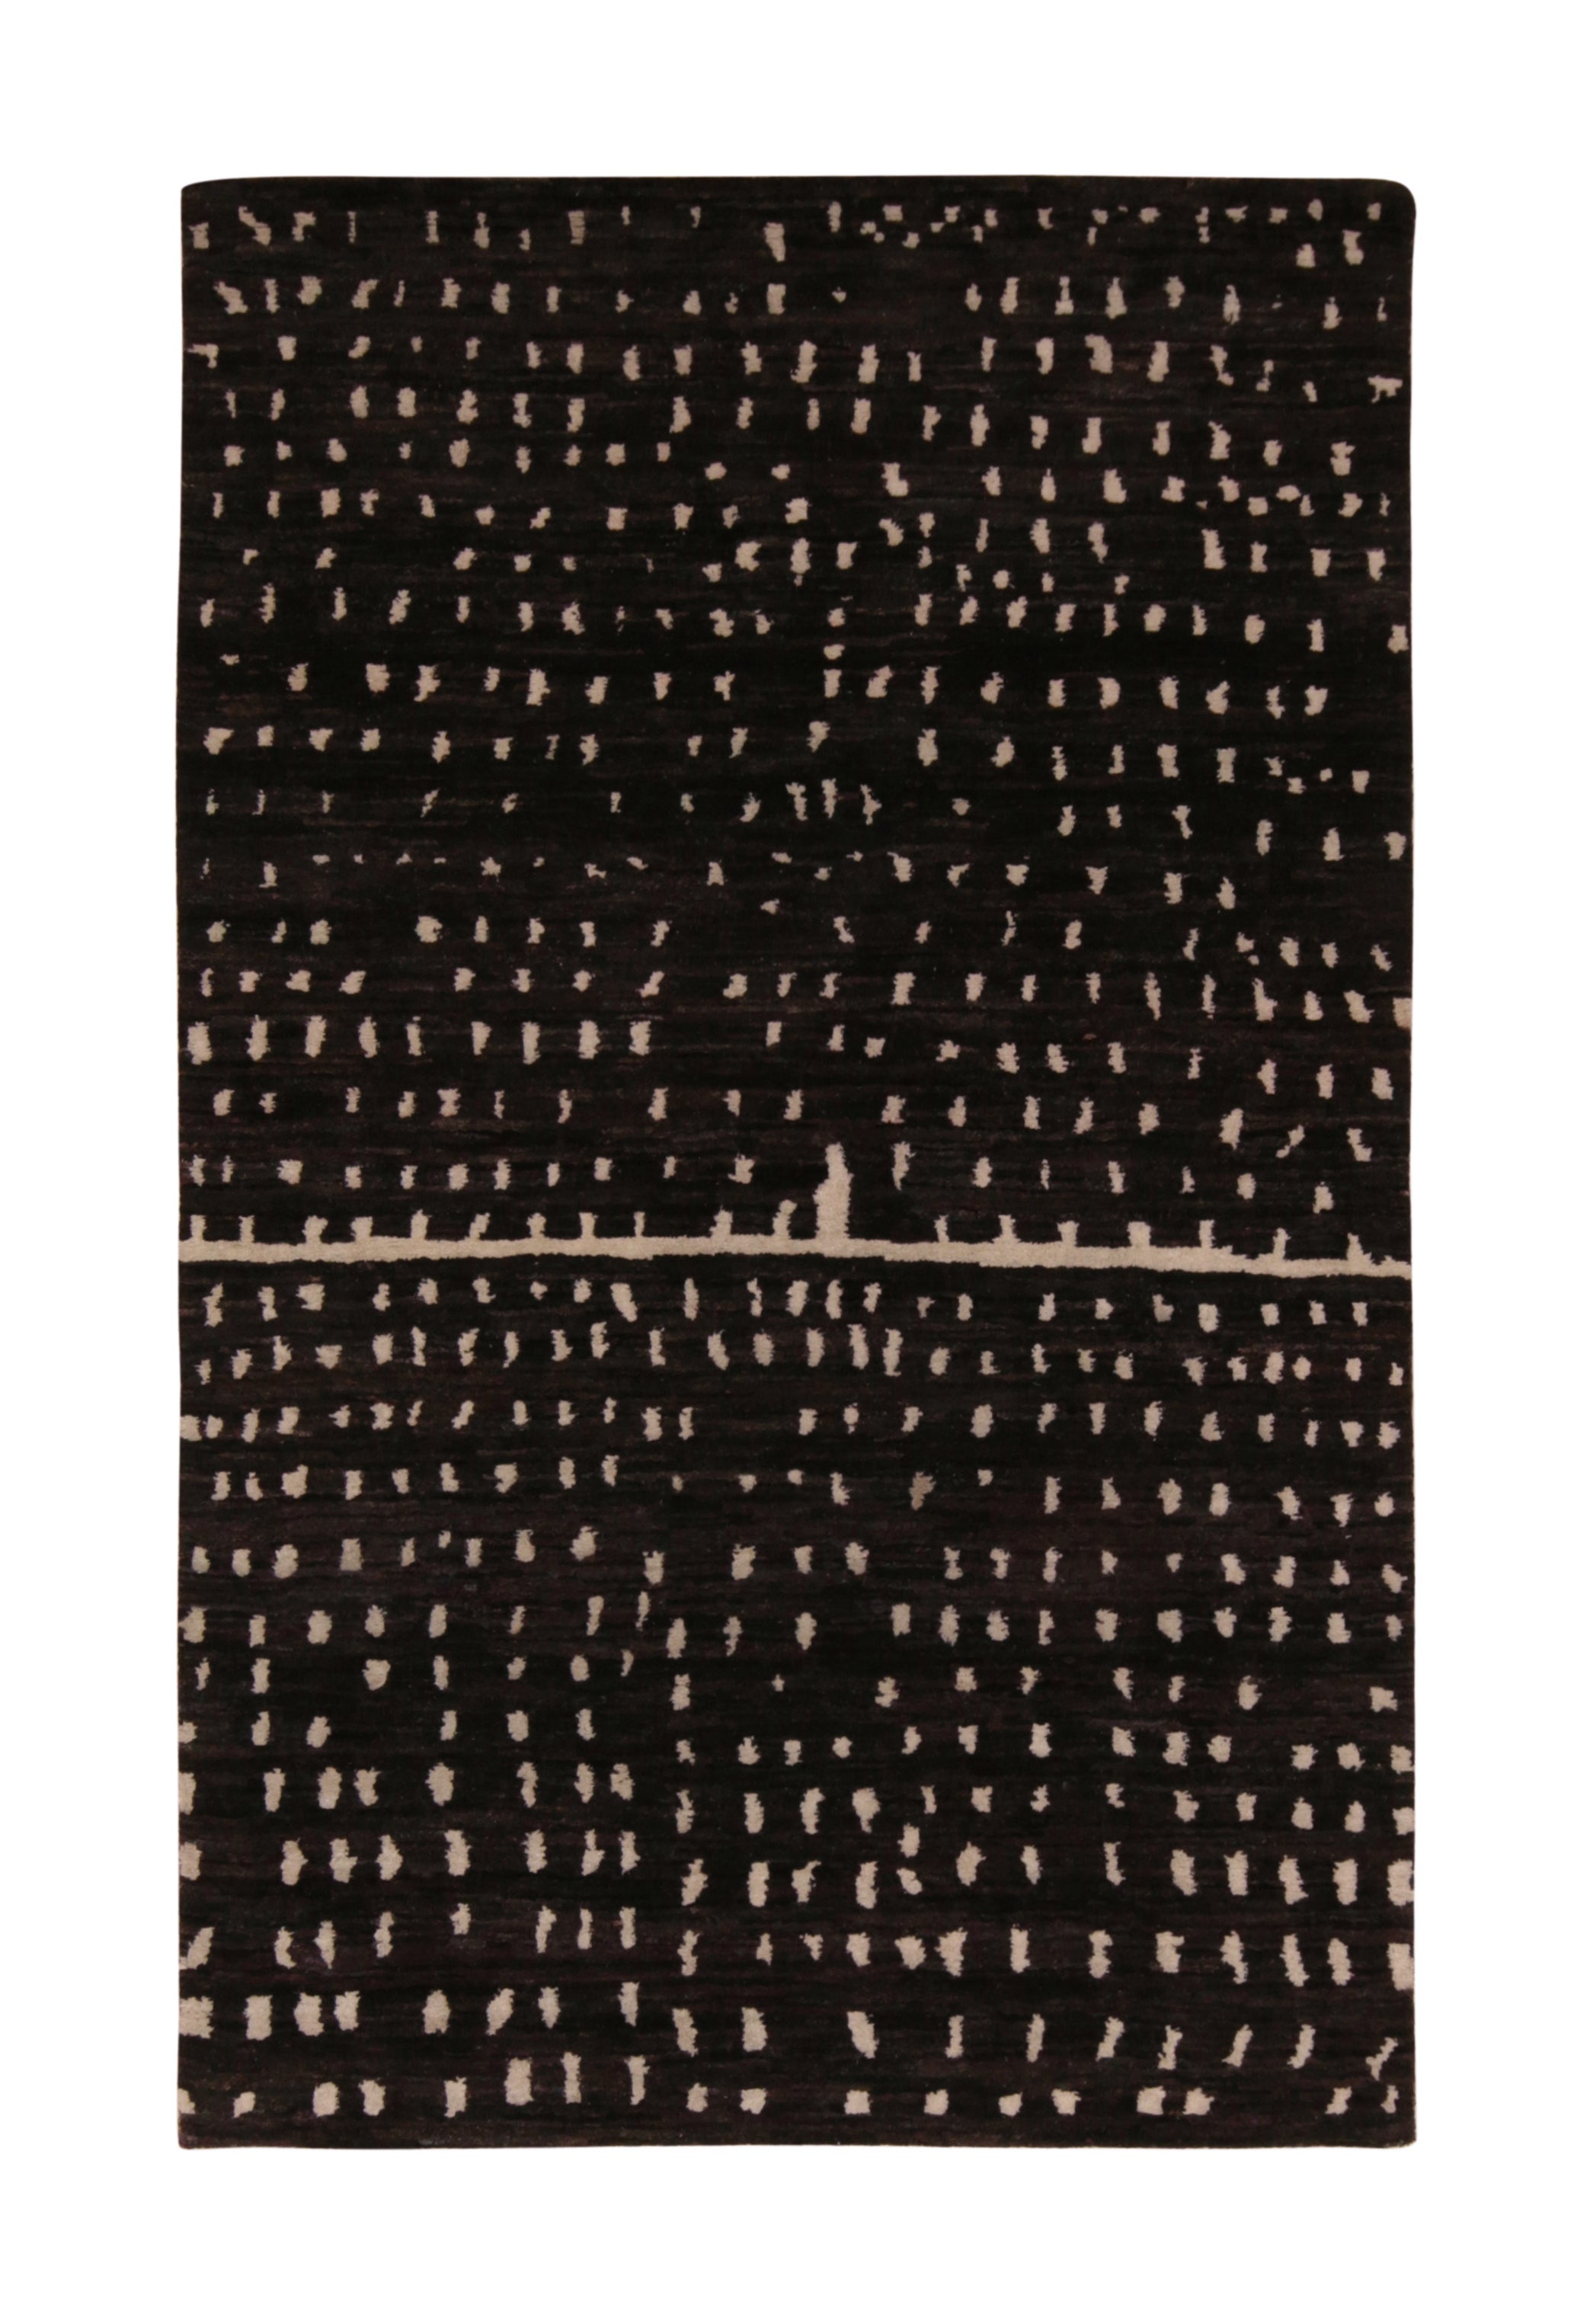 Rug & Kilim’s Modern Rug in Black & White Dots Pattern